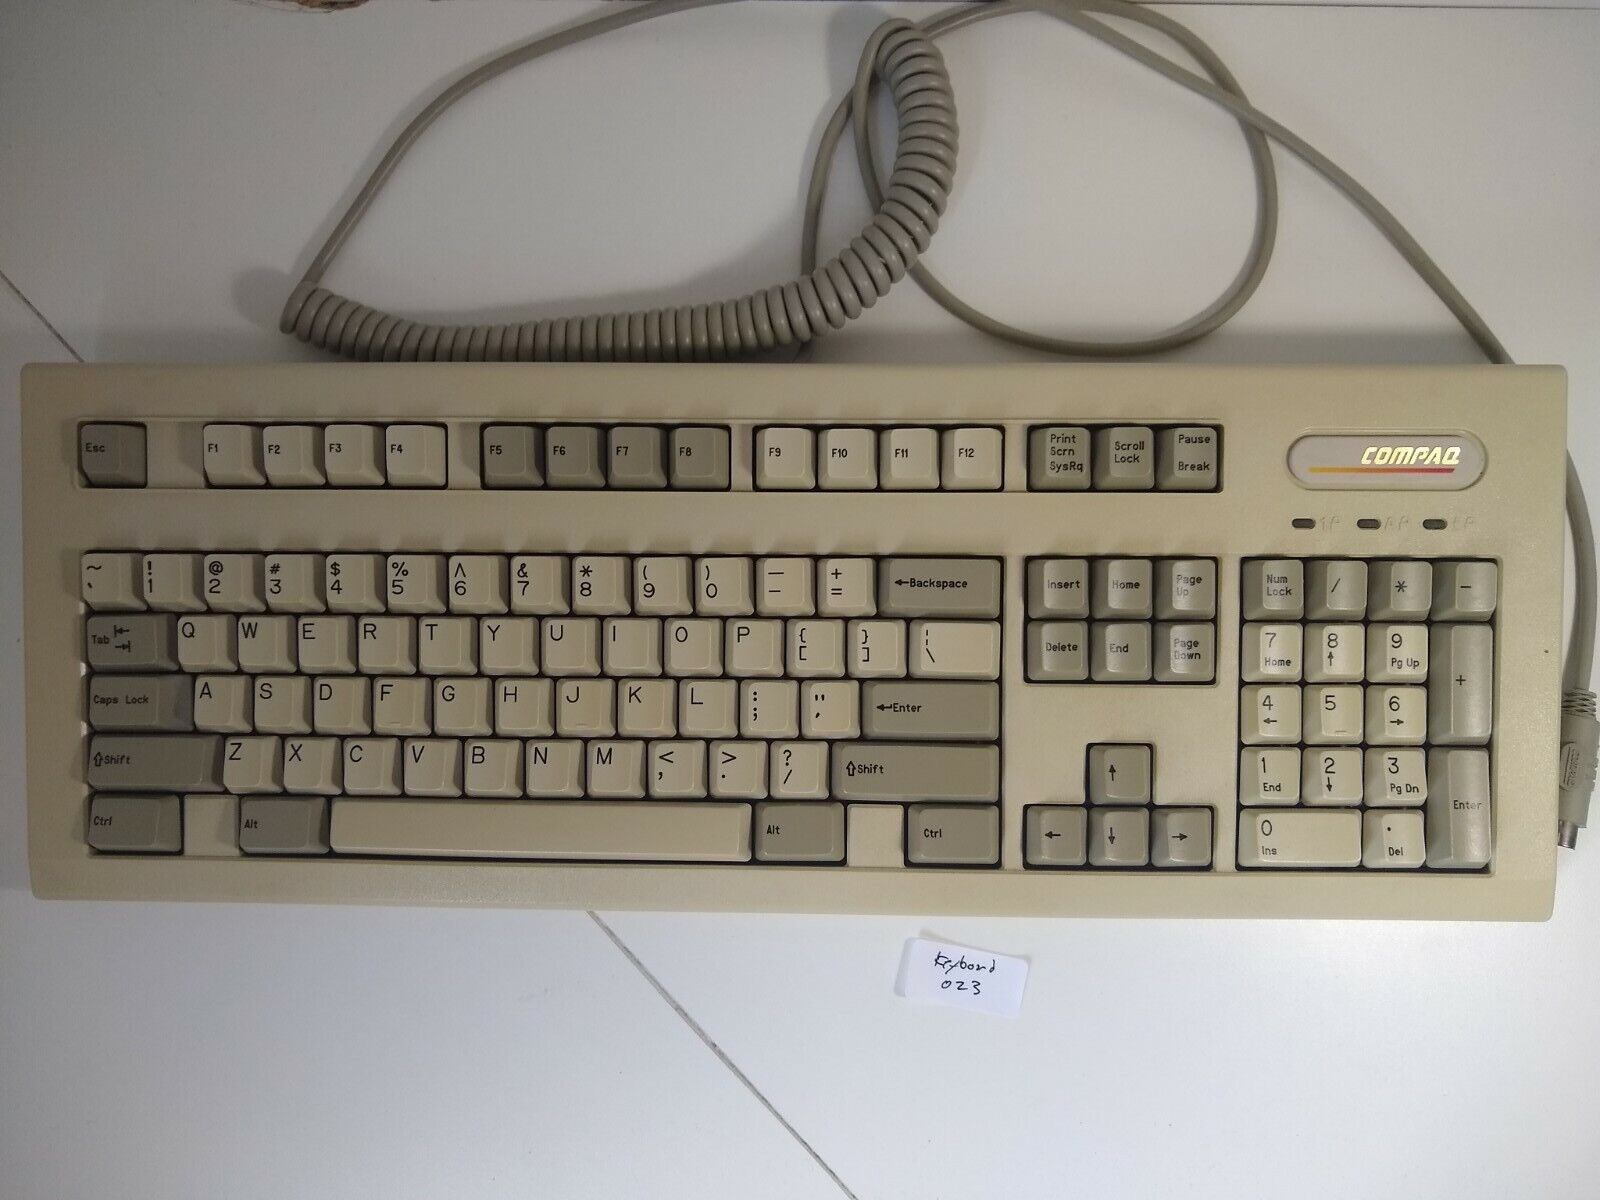 Compaq enhanced model III keyboard - Vintage, cleaned, beige, untested, serial